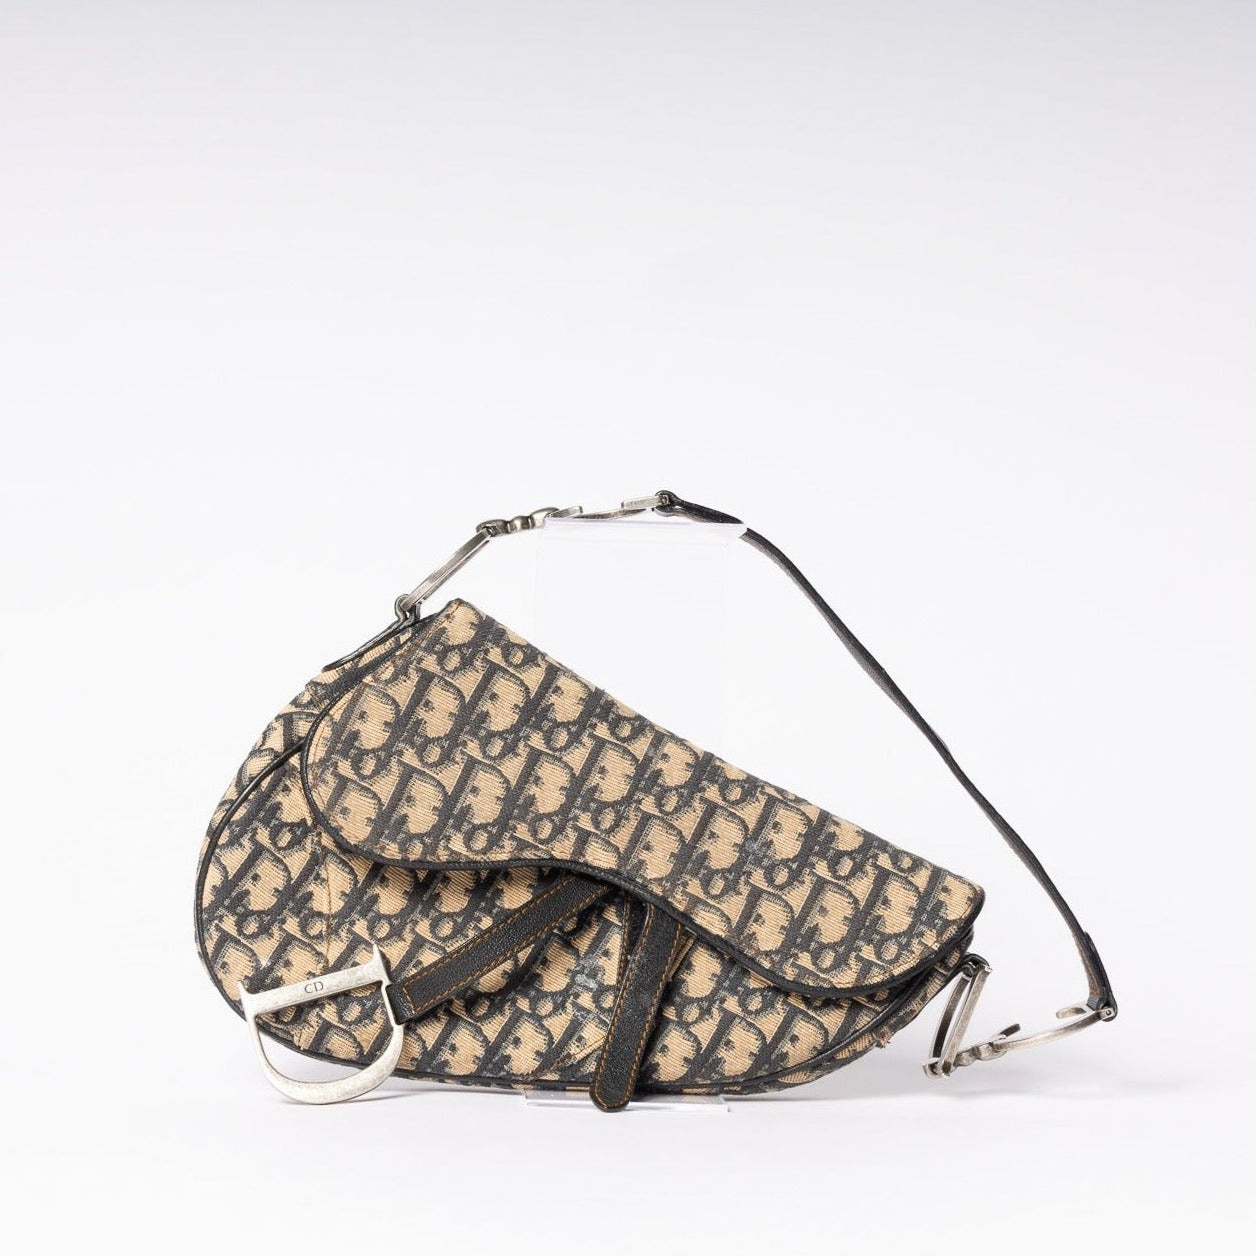 Vintage Dior Saddle Bag - Timeless elegance and iconic fashion statement